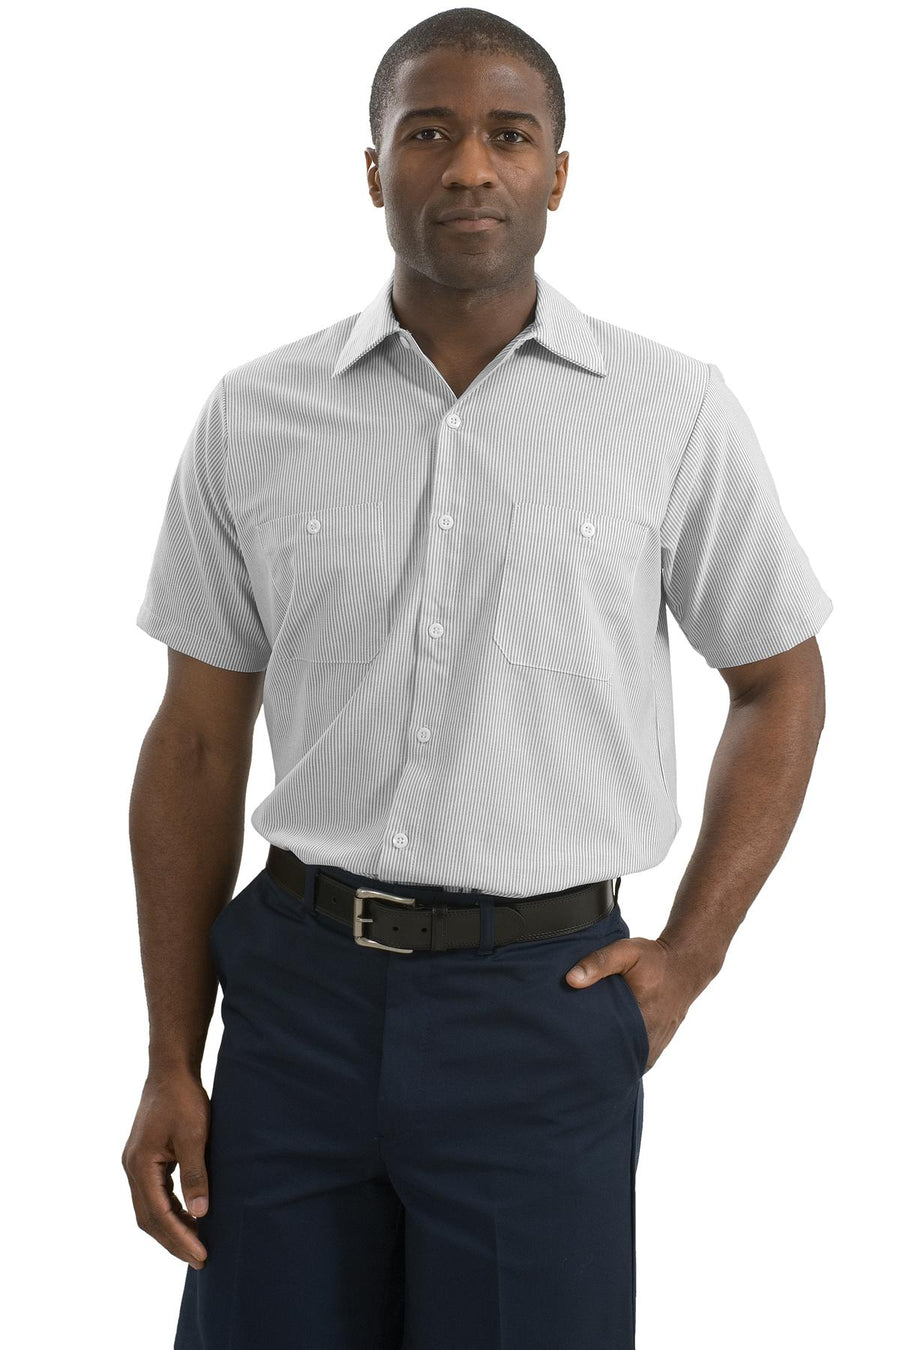 Red Kap Long Size Short Sleeve Striped Industrial Work Shirt.